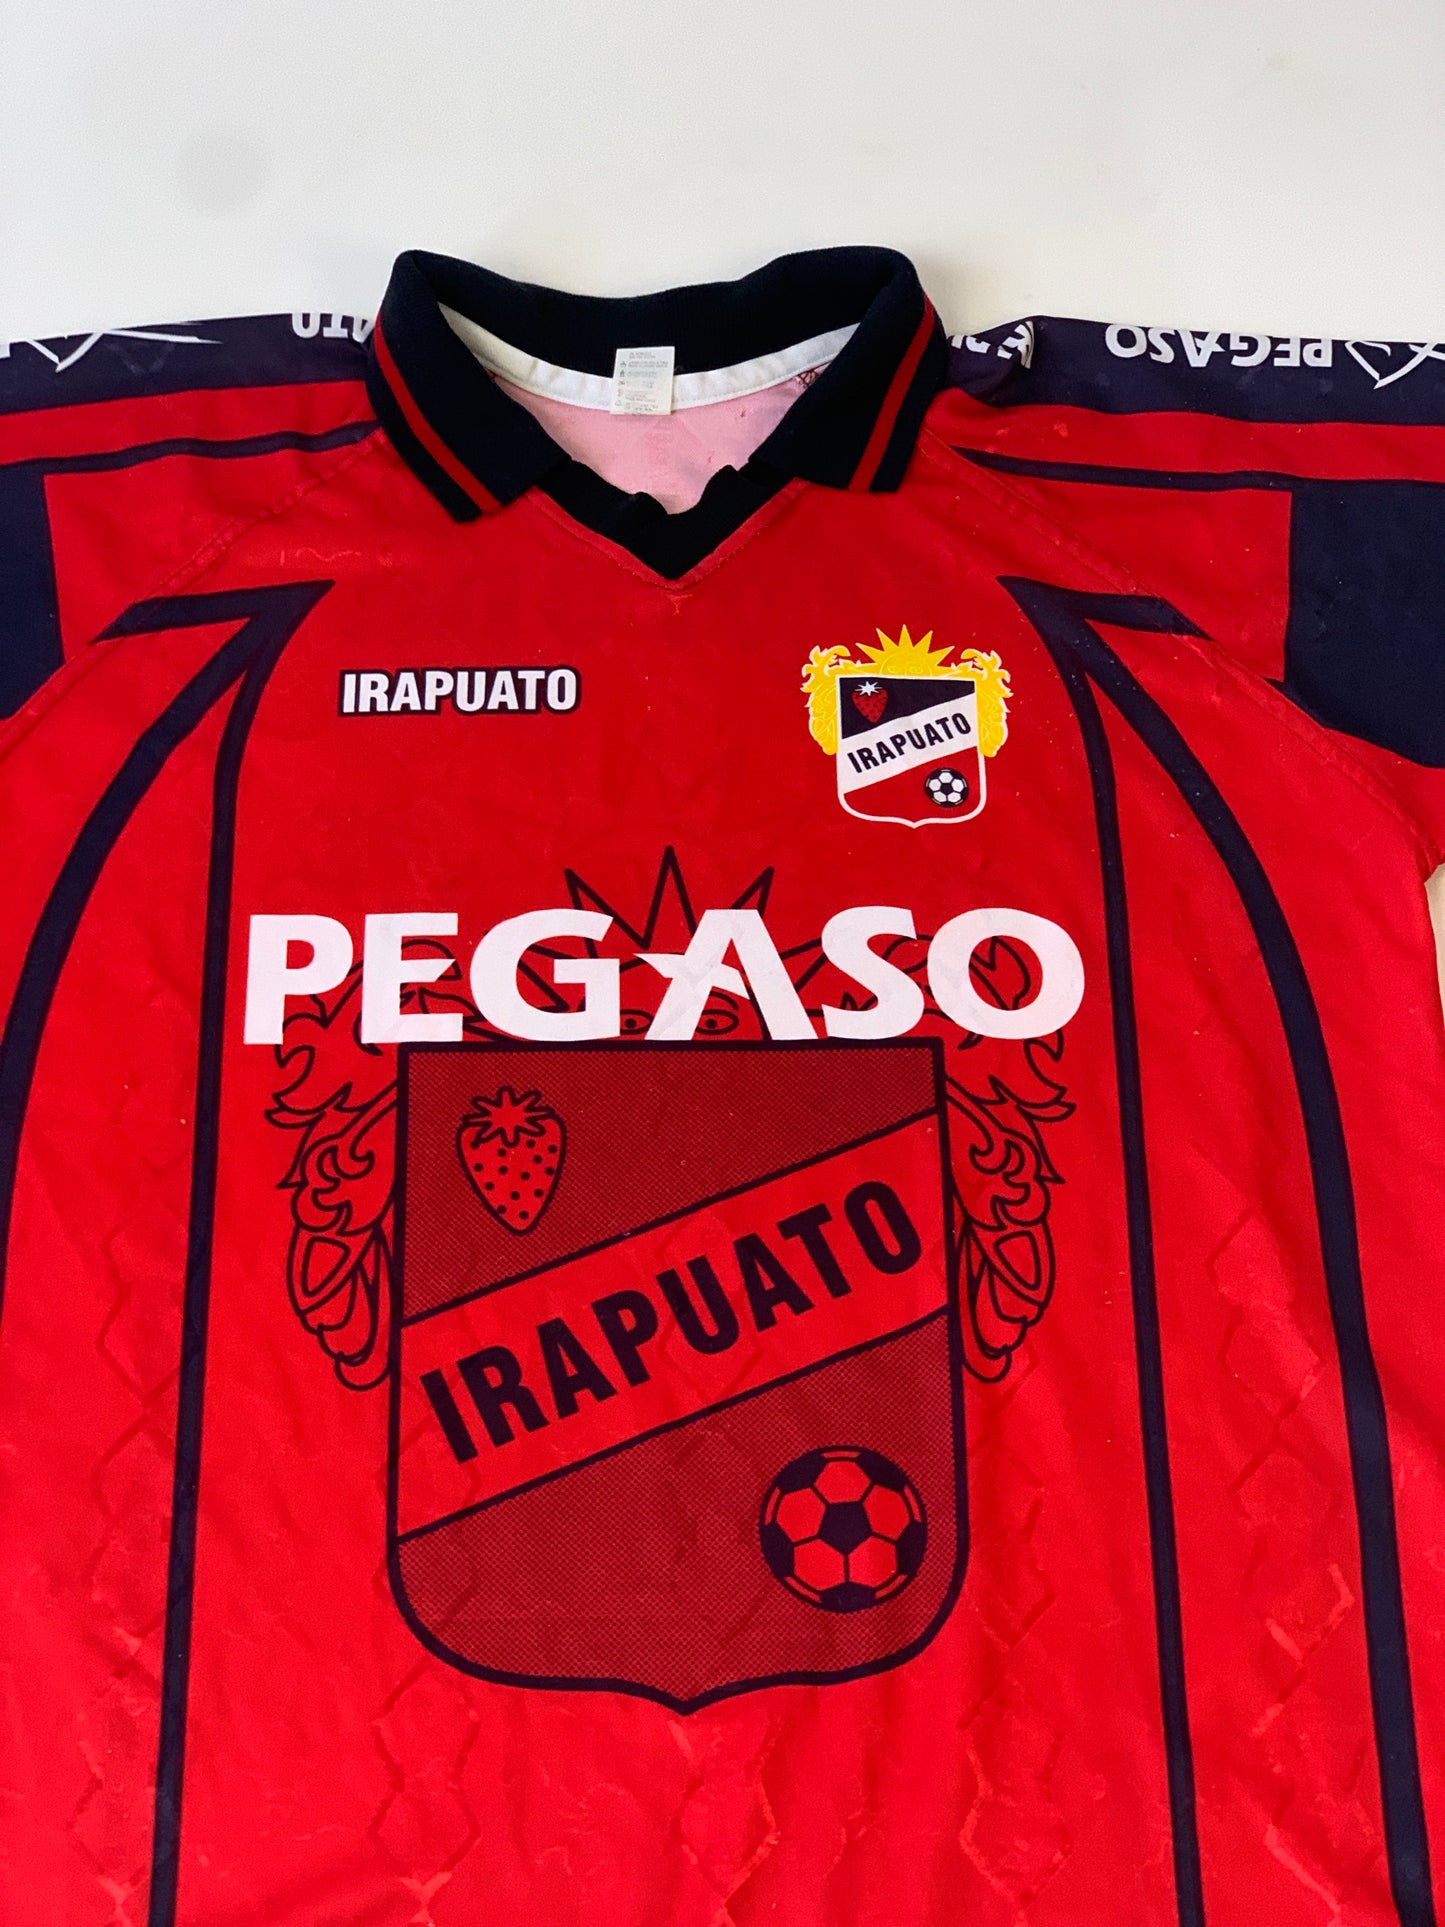 Irapuato 2000 Vintage Jersey - XL